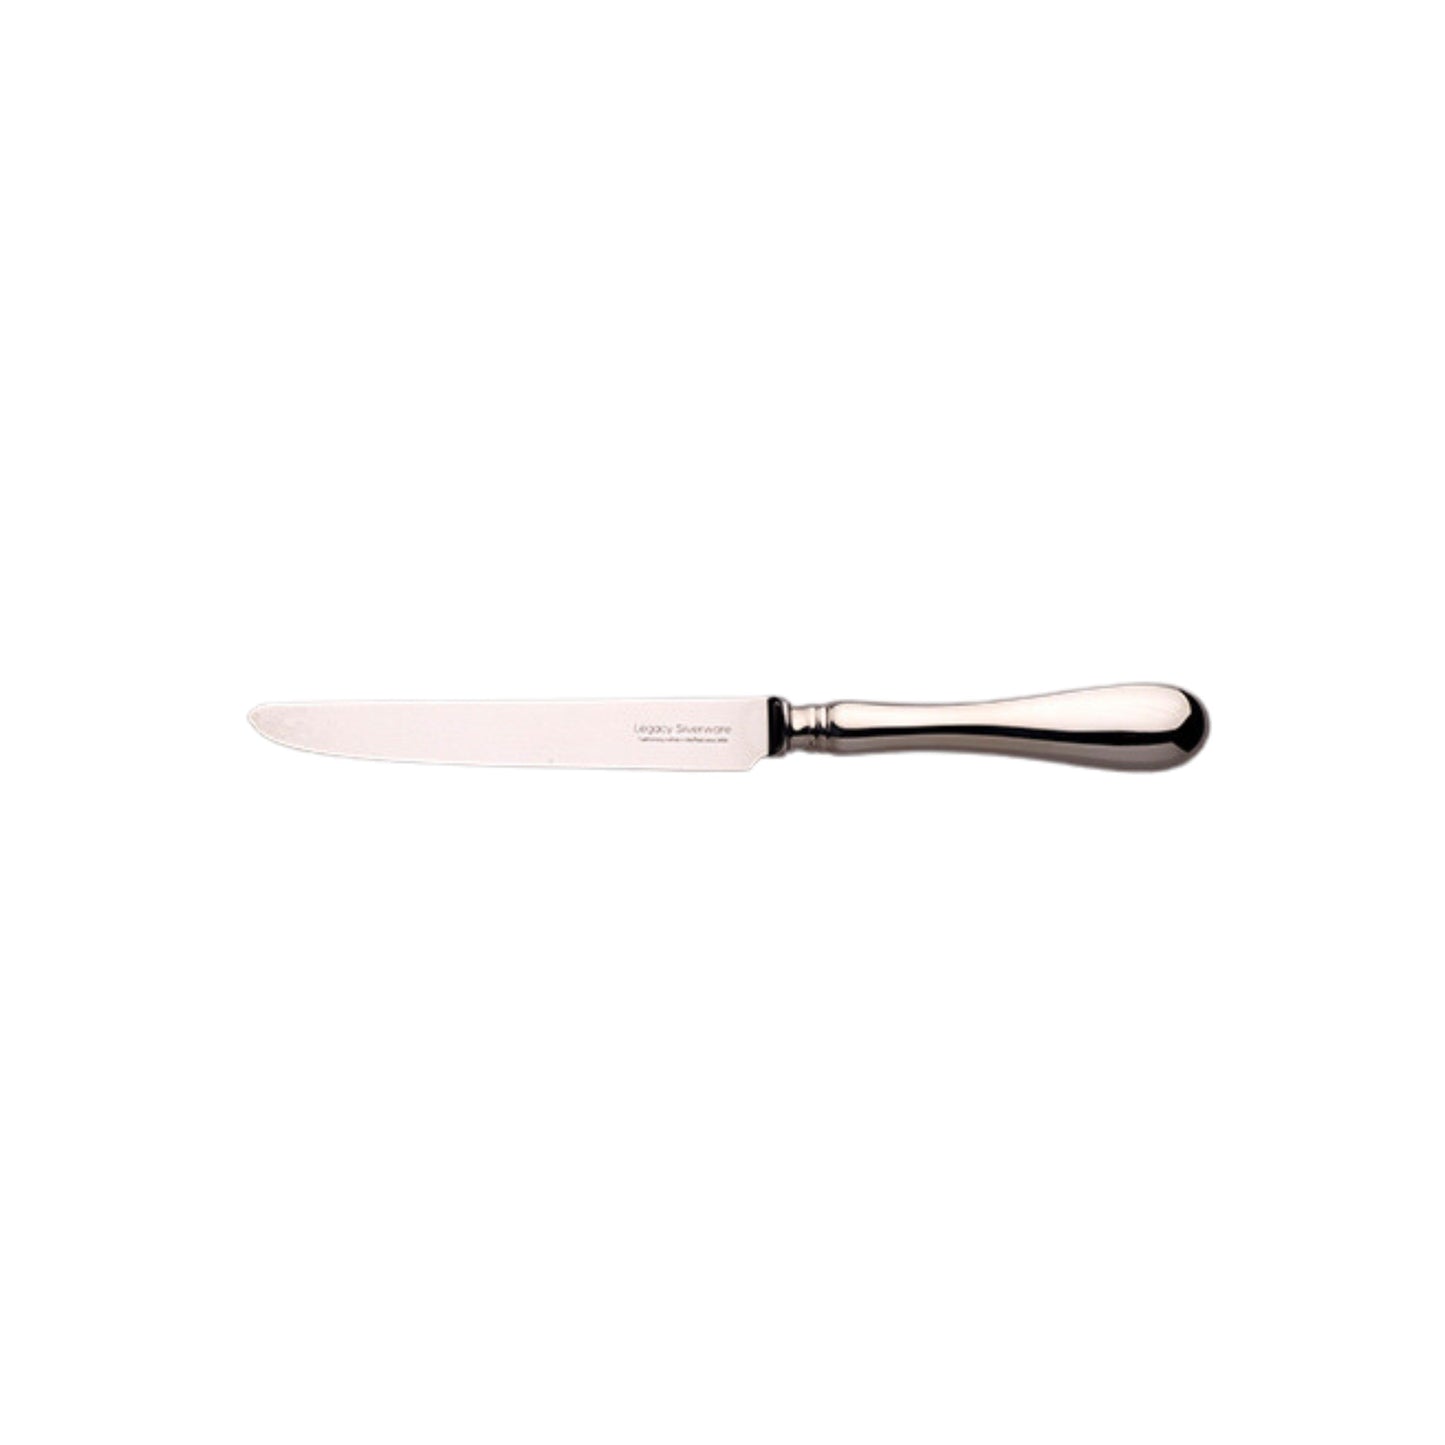 Baguette stainless steel flatware cutlery